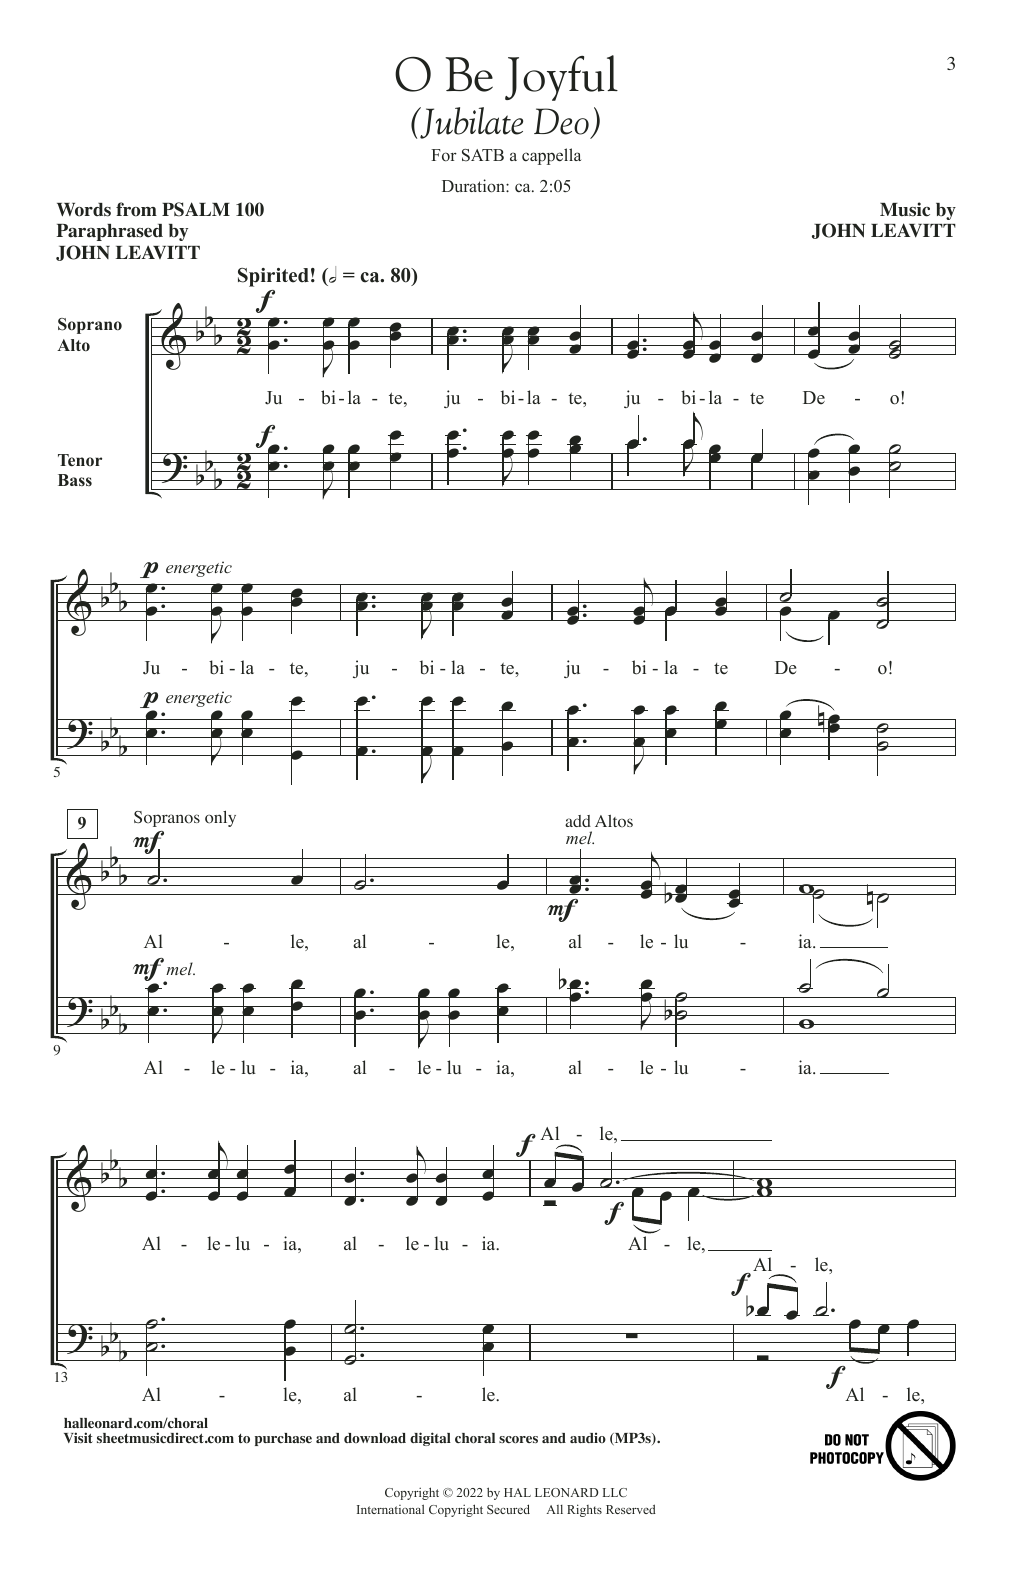 John Leavitt O Be Joyful (Jubilate Deo) Sheet Music Notes & Chords for SATB Choir - Download or Print PDF